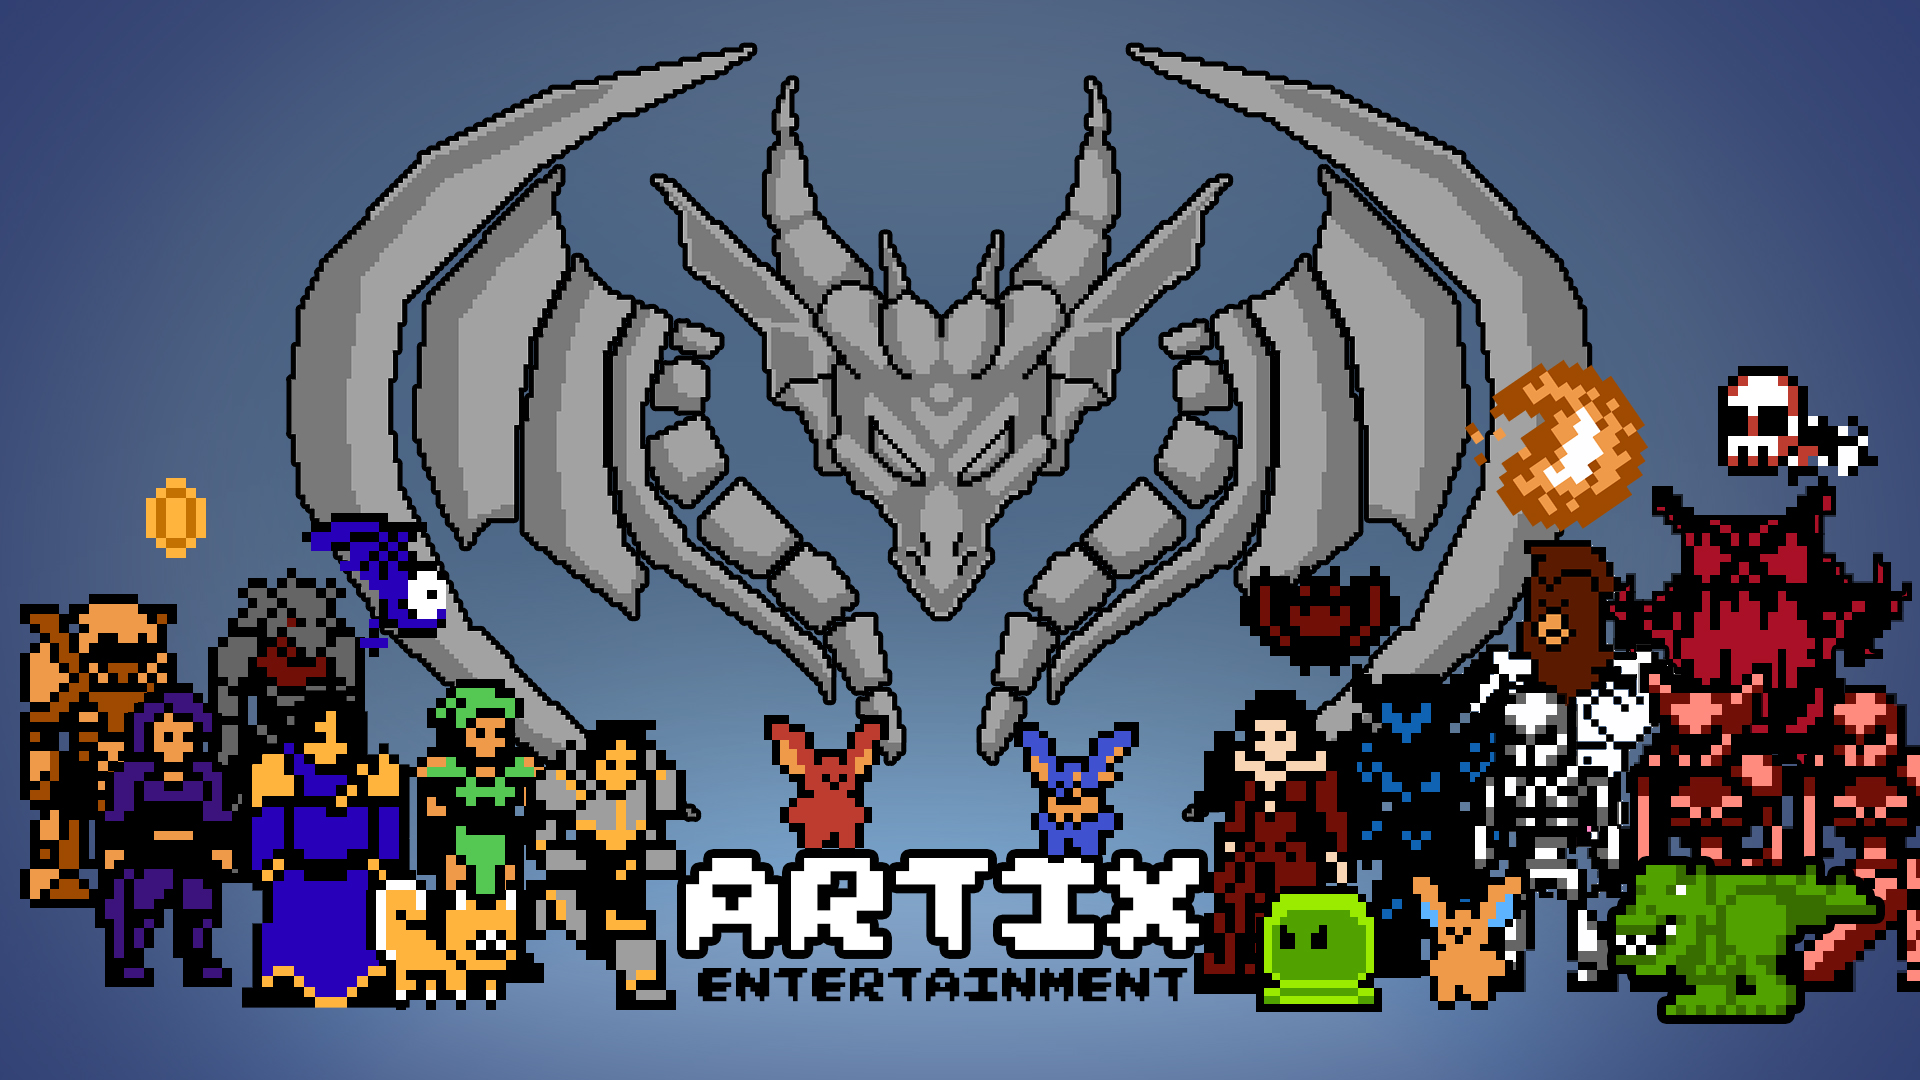 Artix Entertainment Team 8-Bit